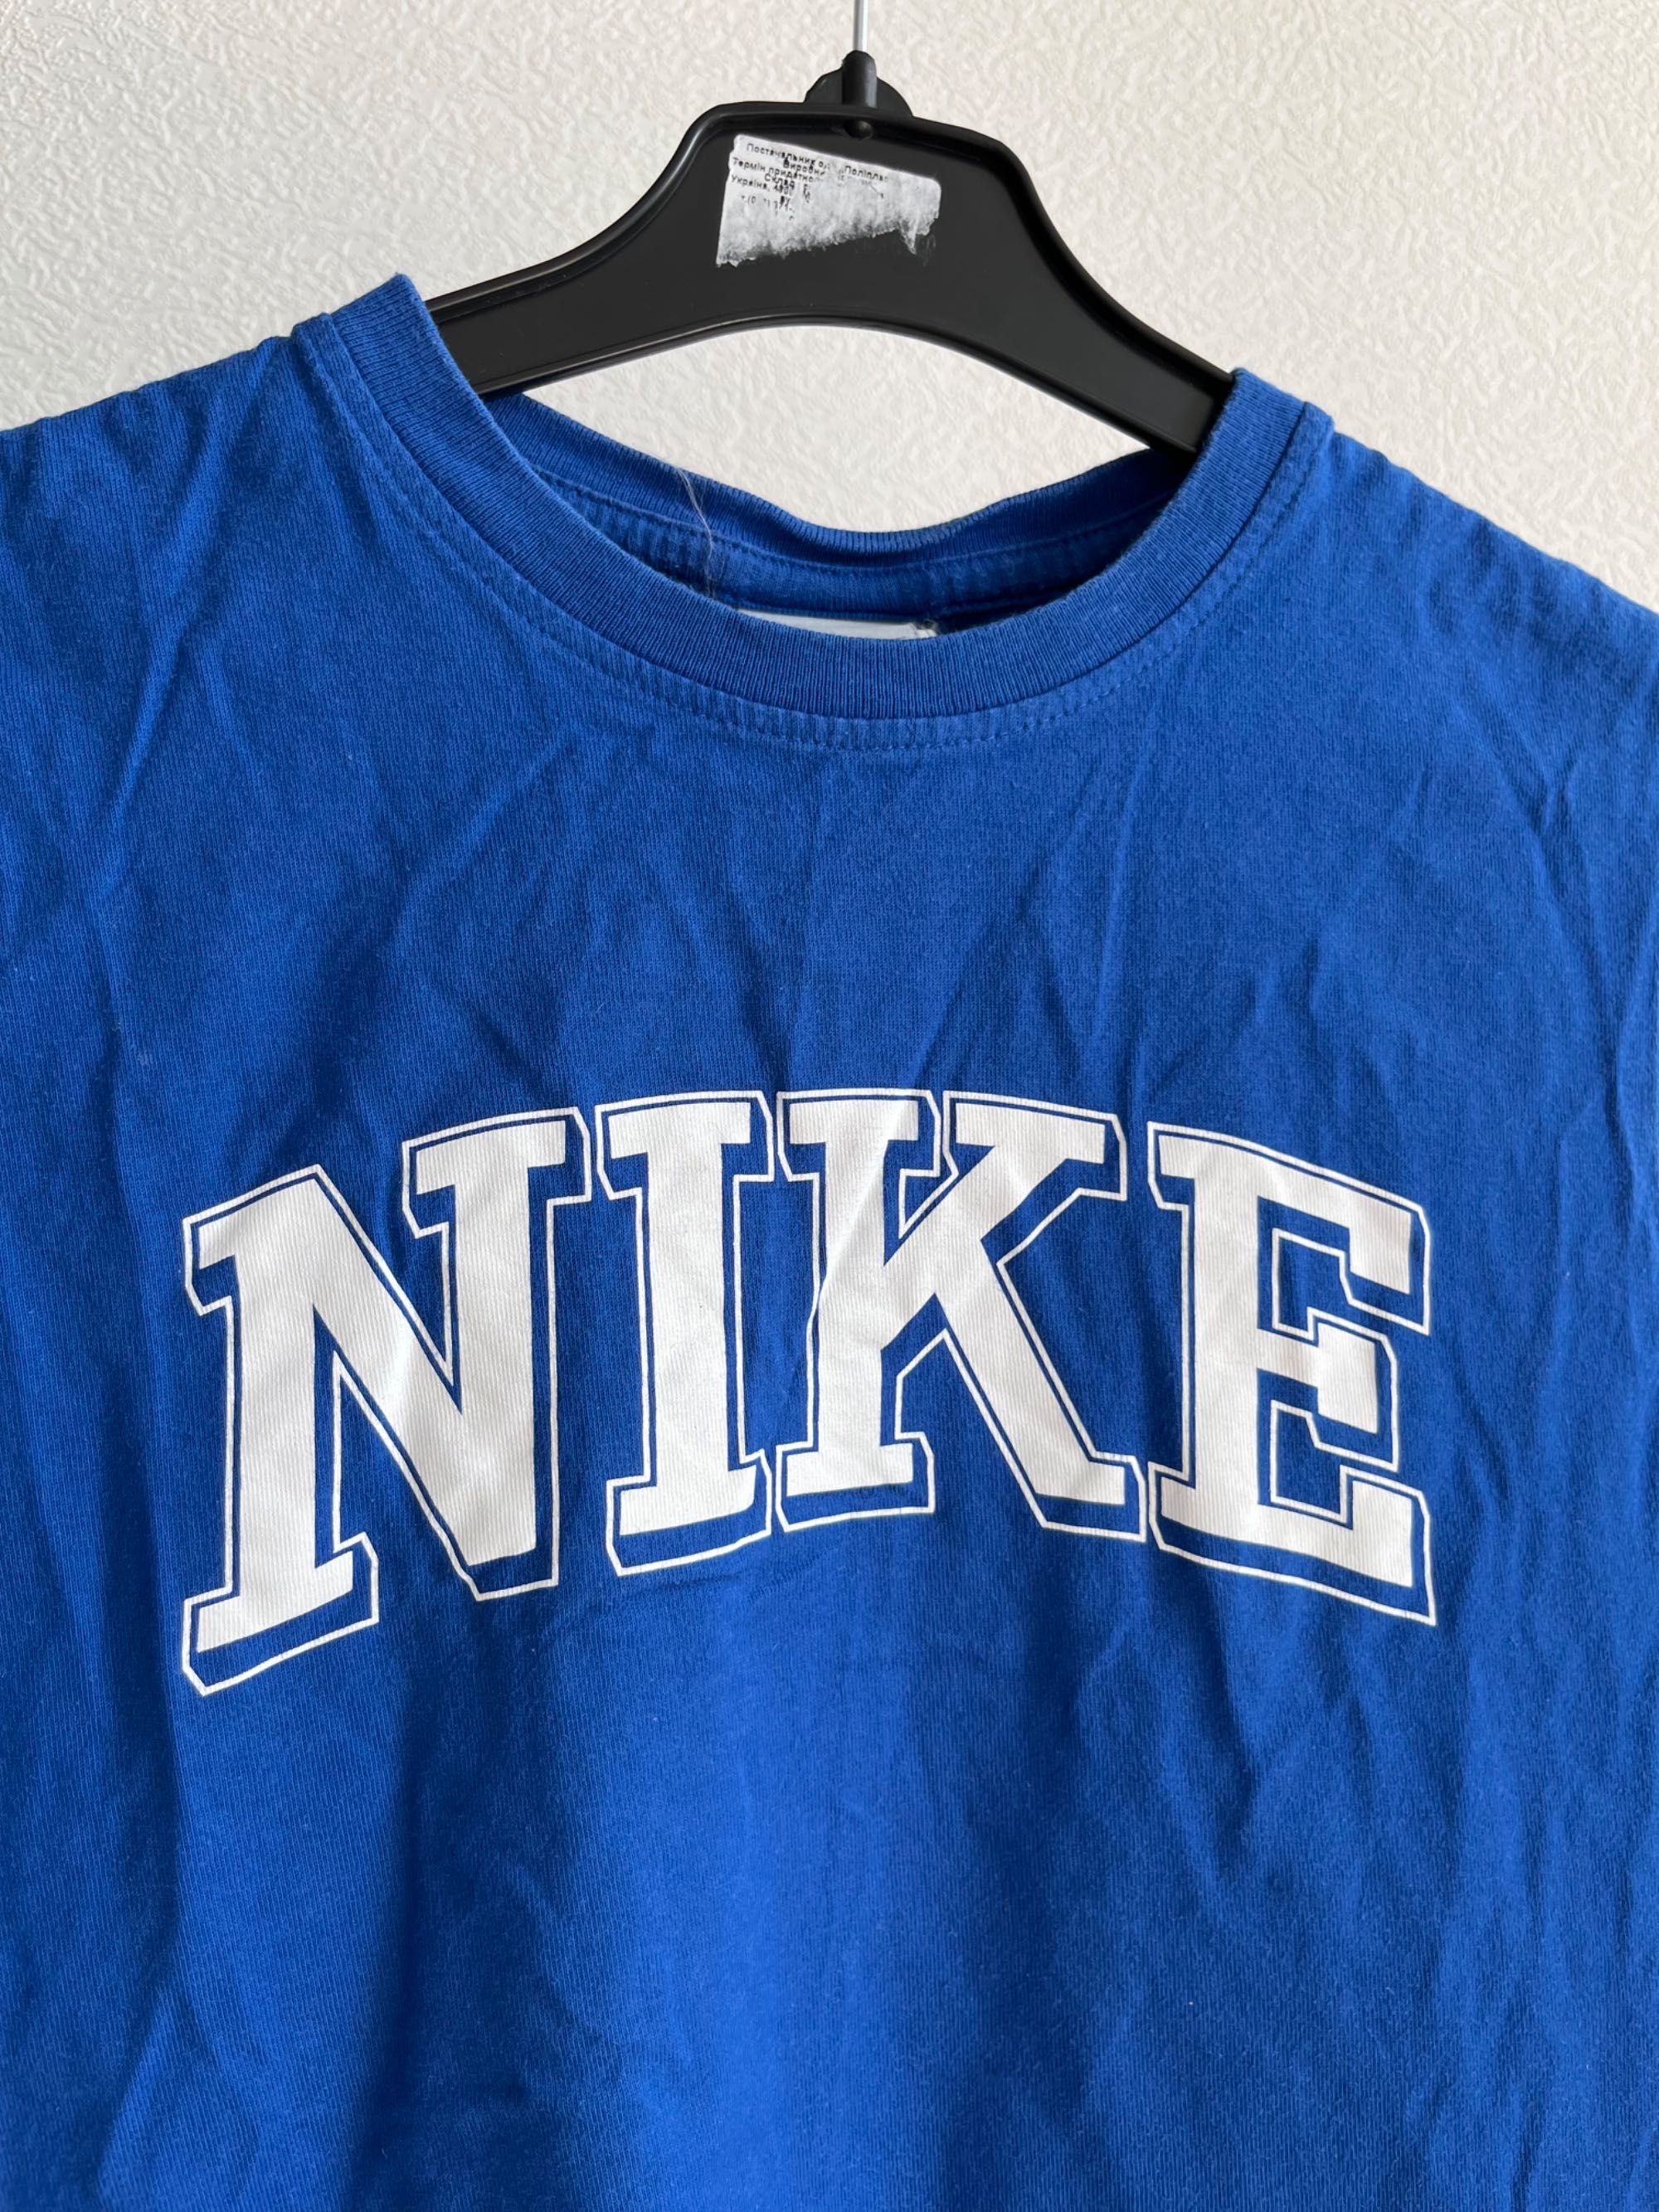 Майка/футболка Nike Vintage